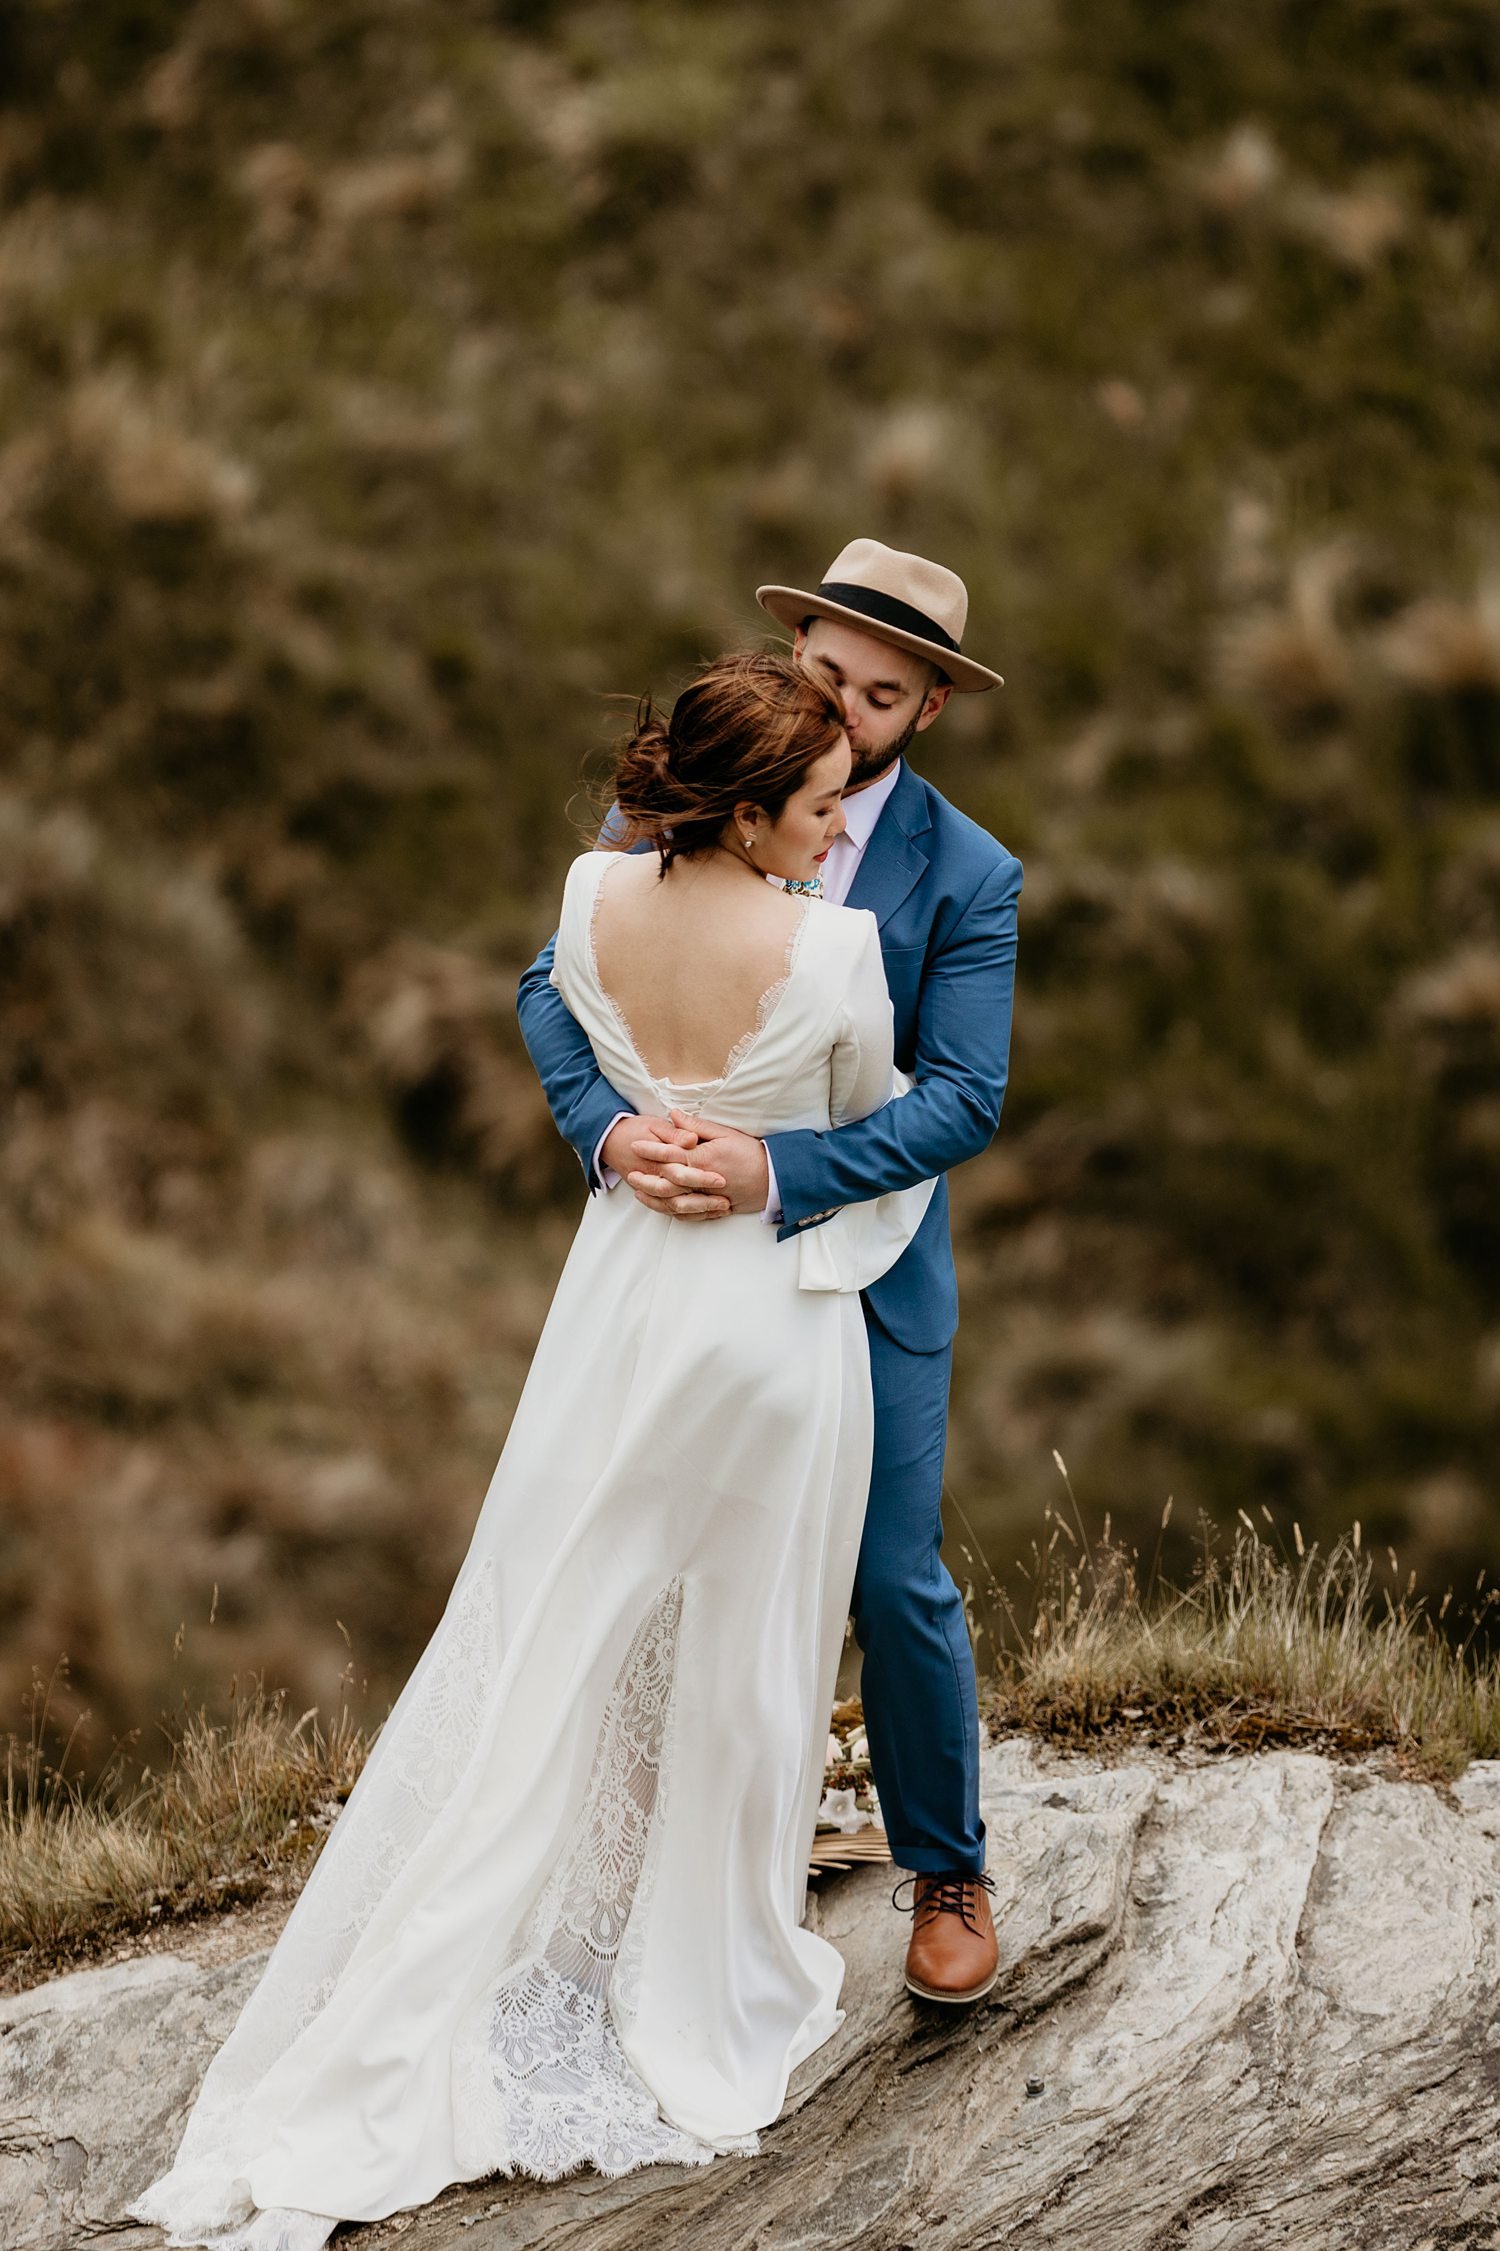 Ollie & Ritz |Panda Bay Films Wedding Photographer Queenstown New Zealand  Elopement Pre Wedding and Heli-Wedding Photography_-51.jpg